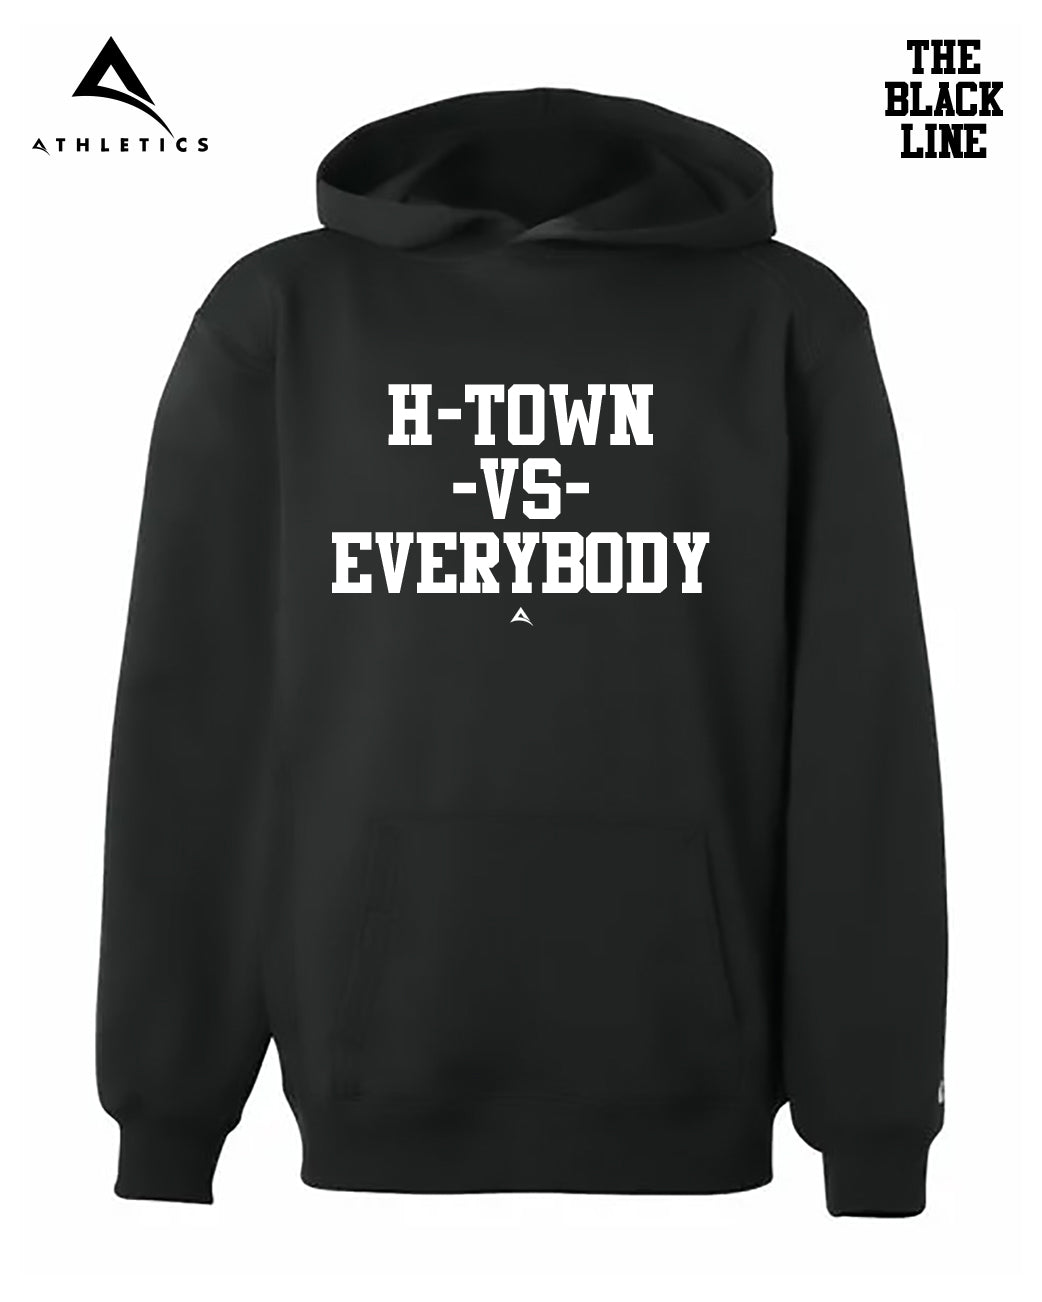 H-TOWN Vs EVERYBODY